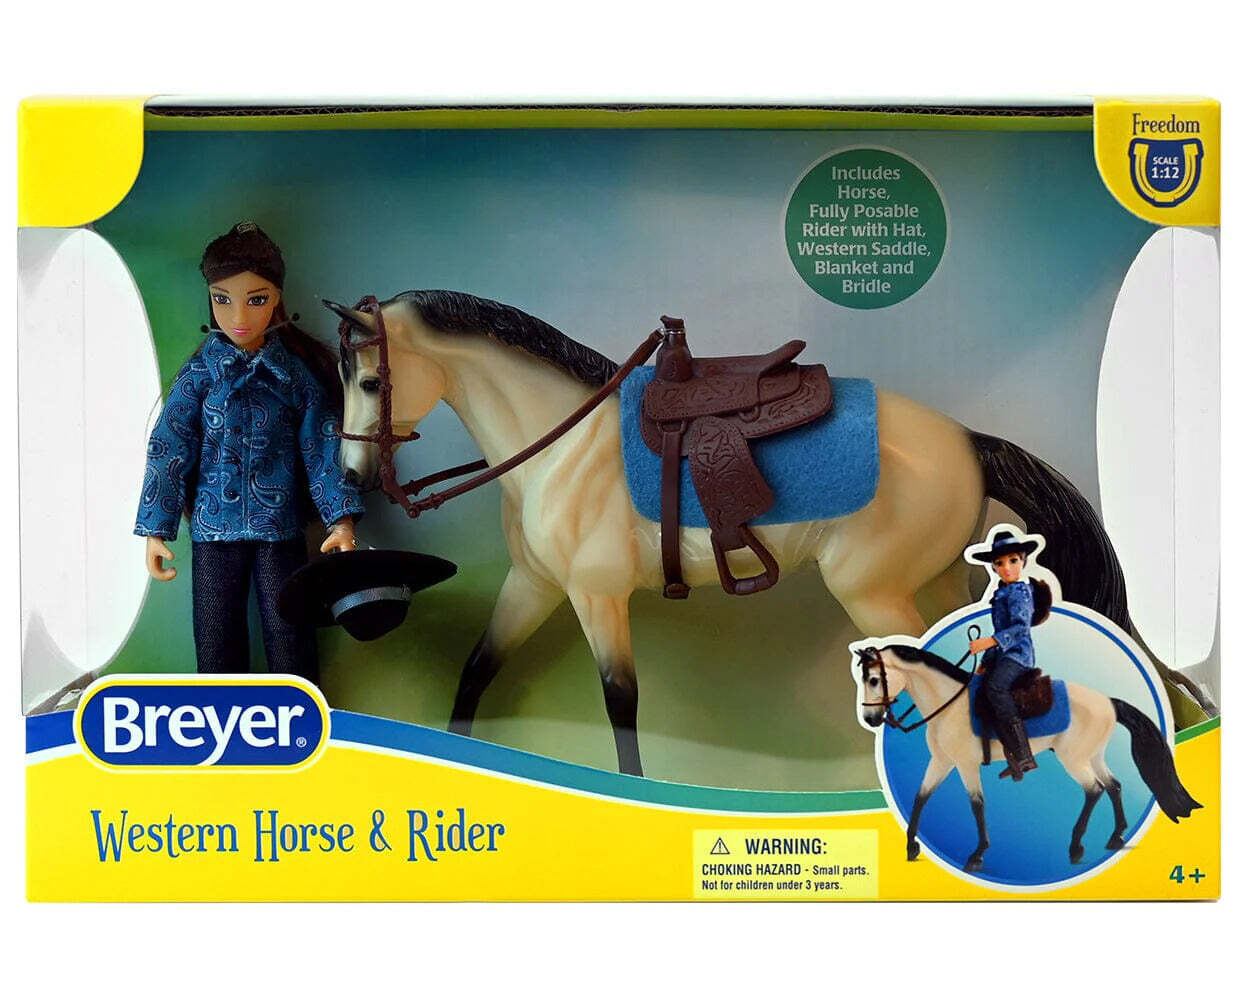 BREYER HORSES #61155 Freedom Series Western Horse & Rider NEW